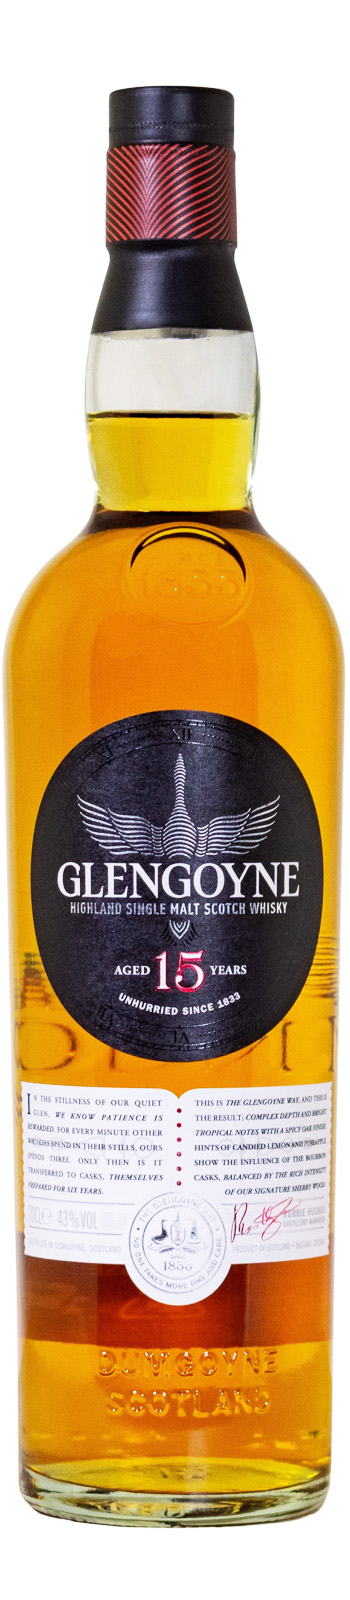 Glengoyne 15 Jahre Highland Single Malt Scotch Whisky - 0,7L 43% vol